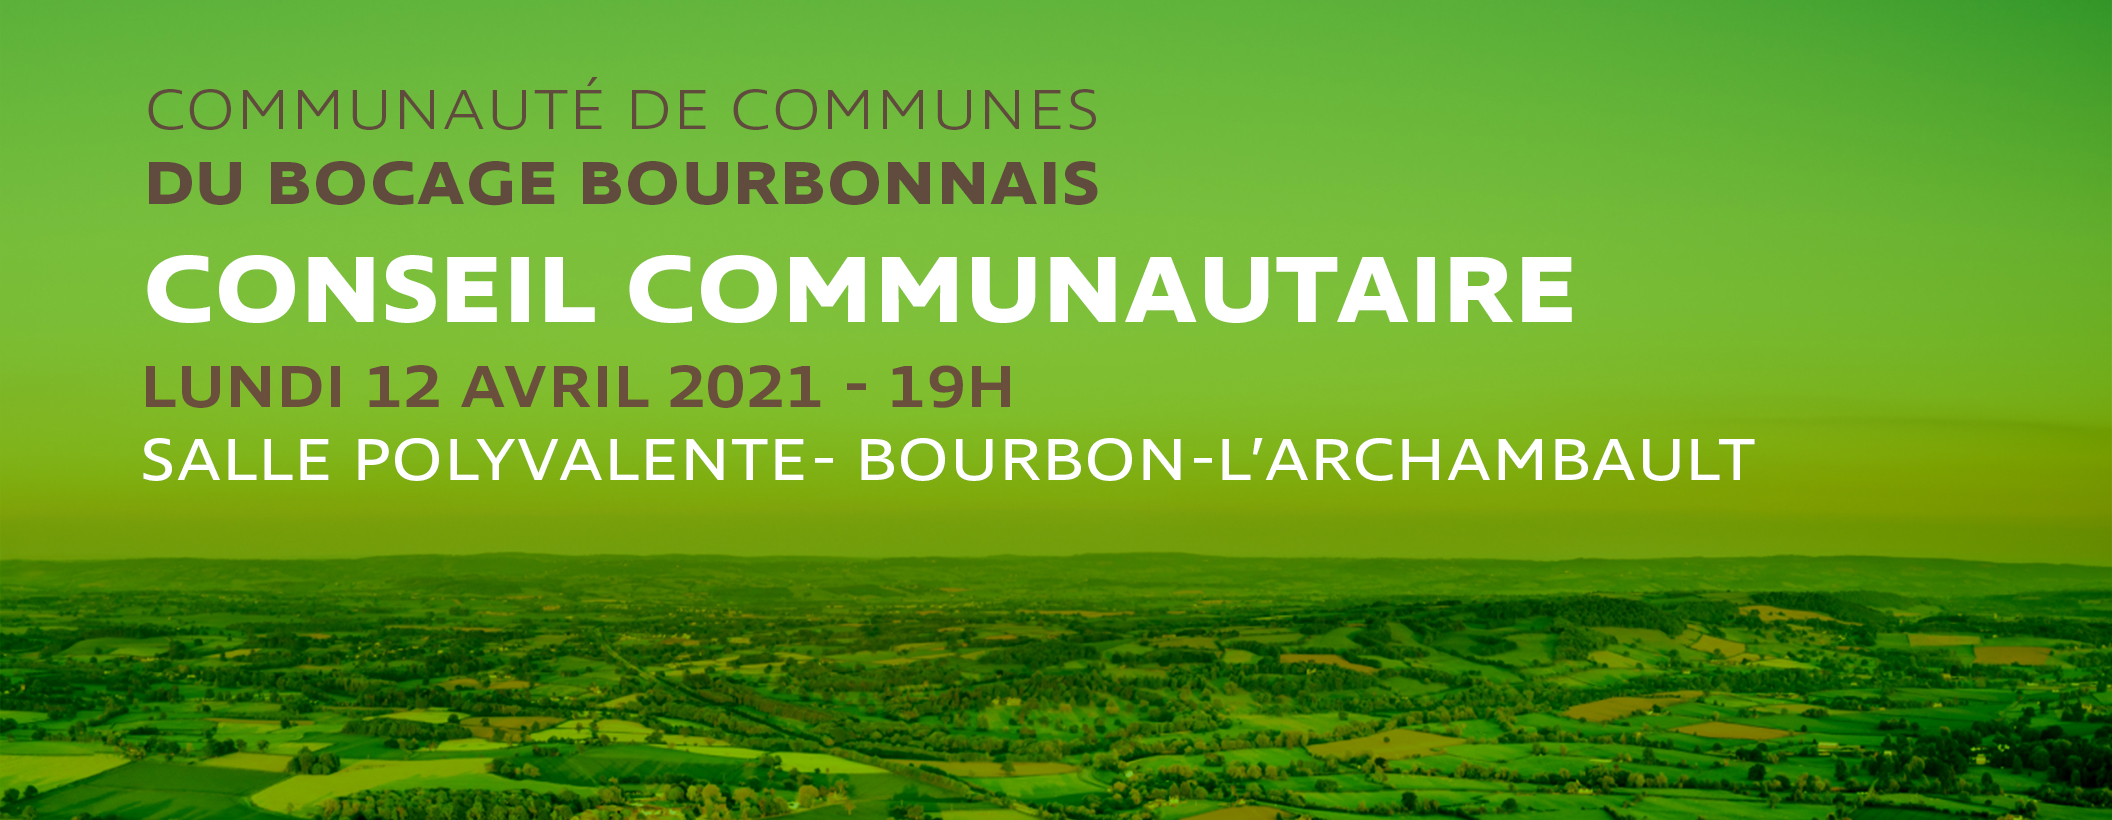 Prochain Conseil Communautaire : lundi 12 avril à Bourbon-l'Archambault